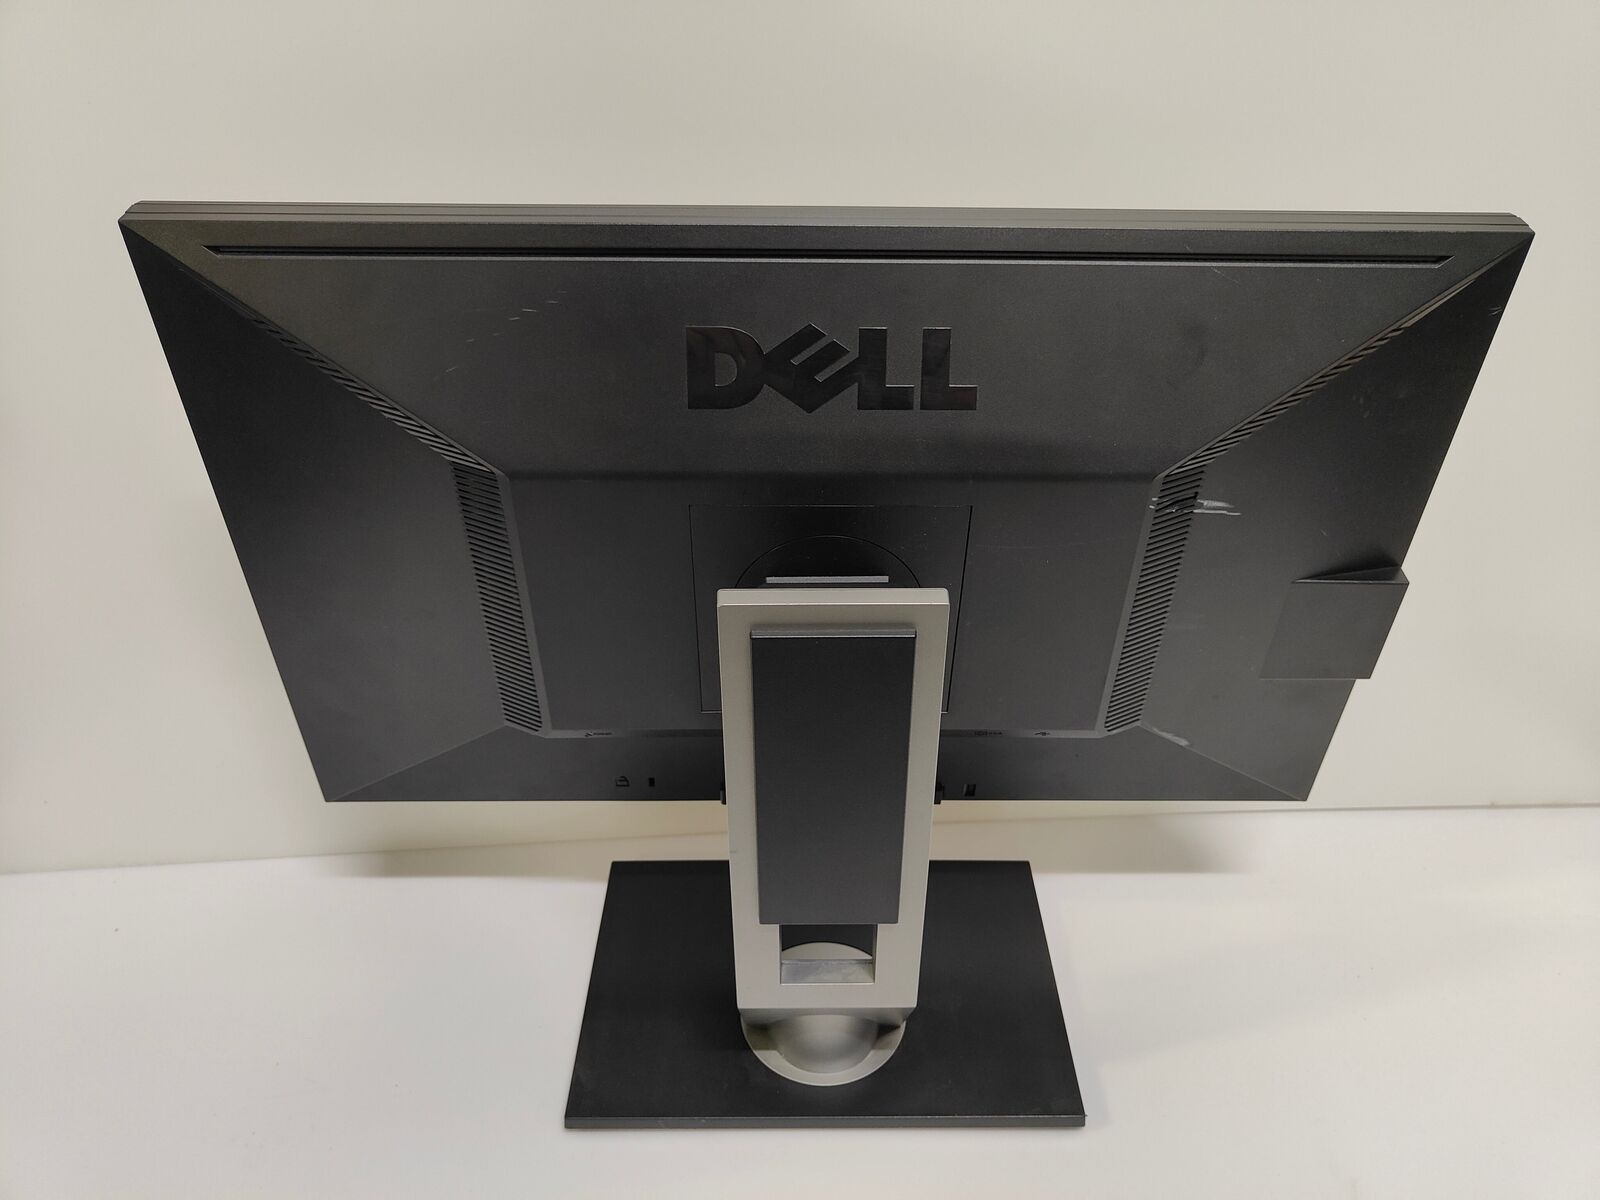 Dell Professional P2411H 24-inch Widescreen Monitor